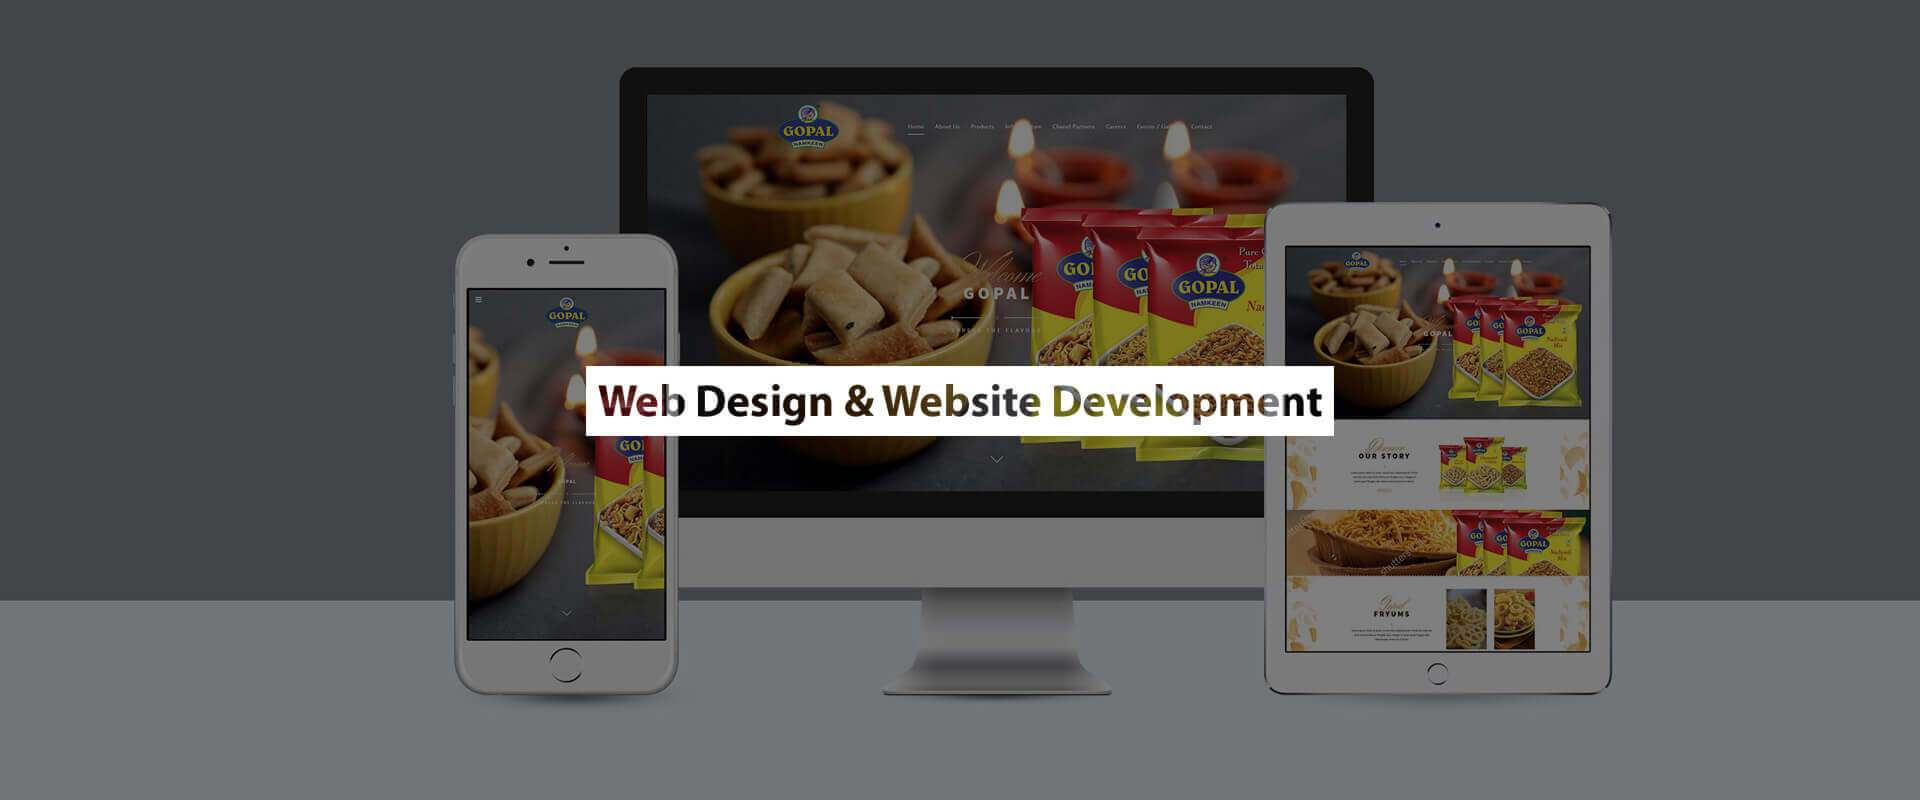 Web Design & Website Development